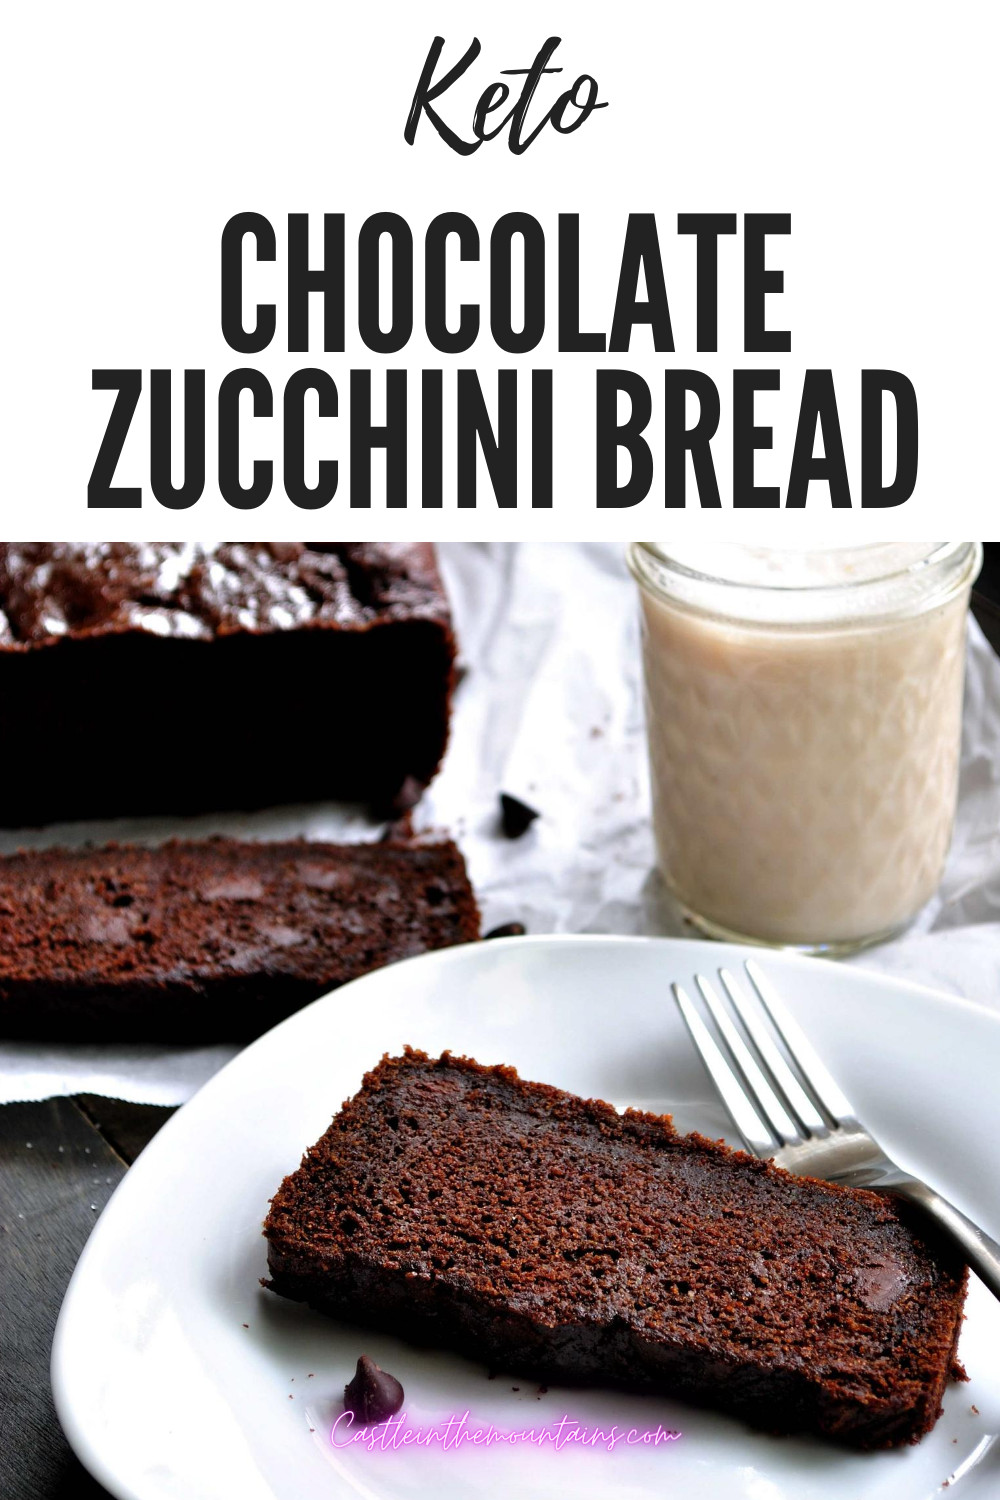 Keto Zucchini Bread Chocolate
 1 Best Rich and Dark Keto Chocolate Zucchini Bread Recipe